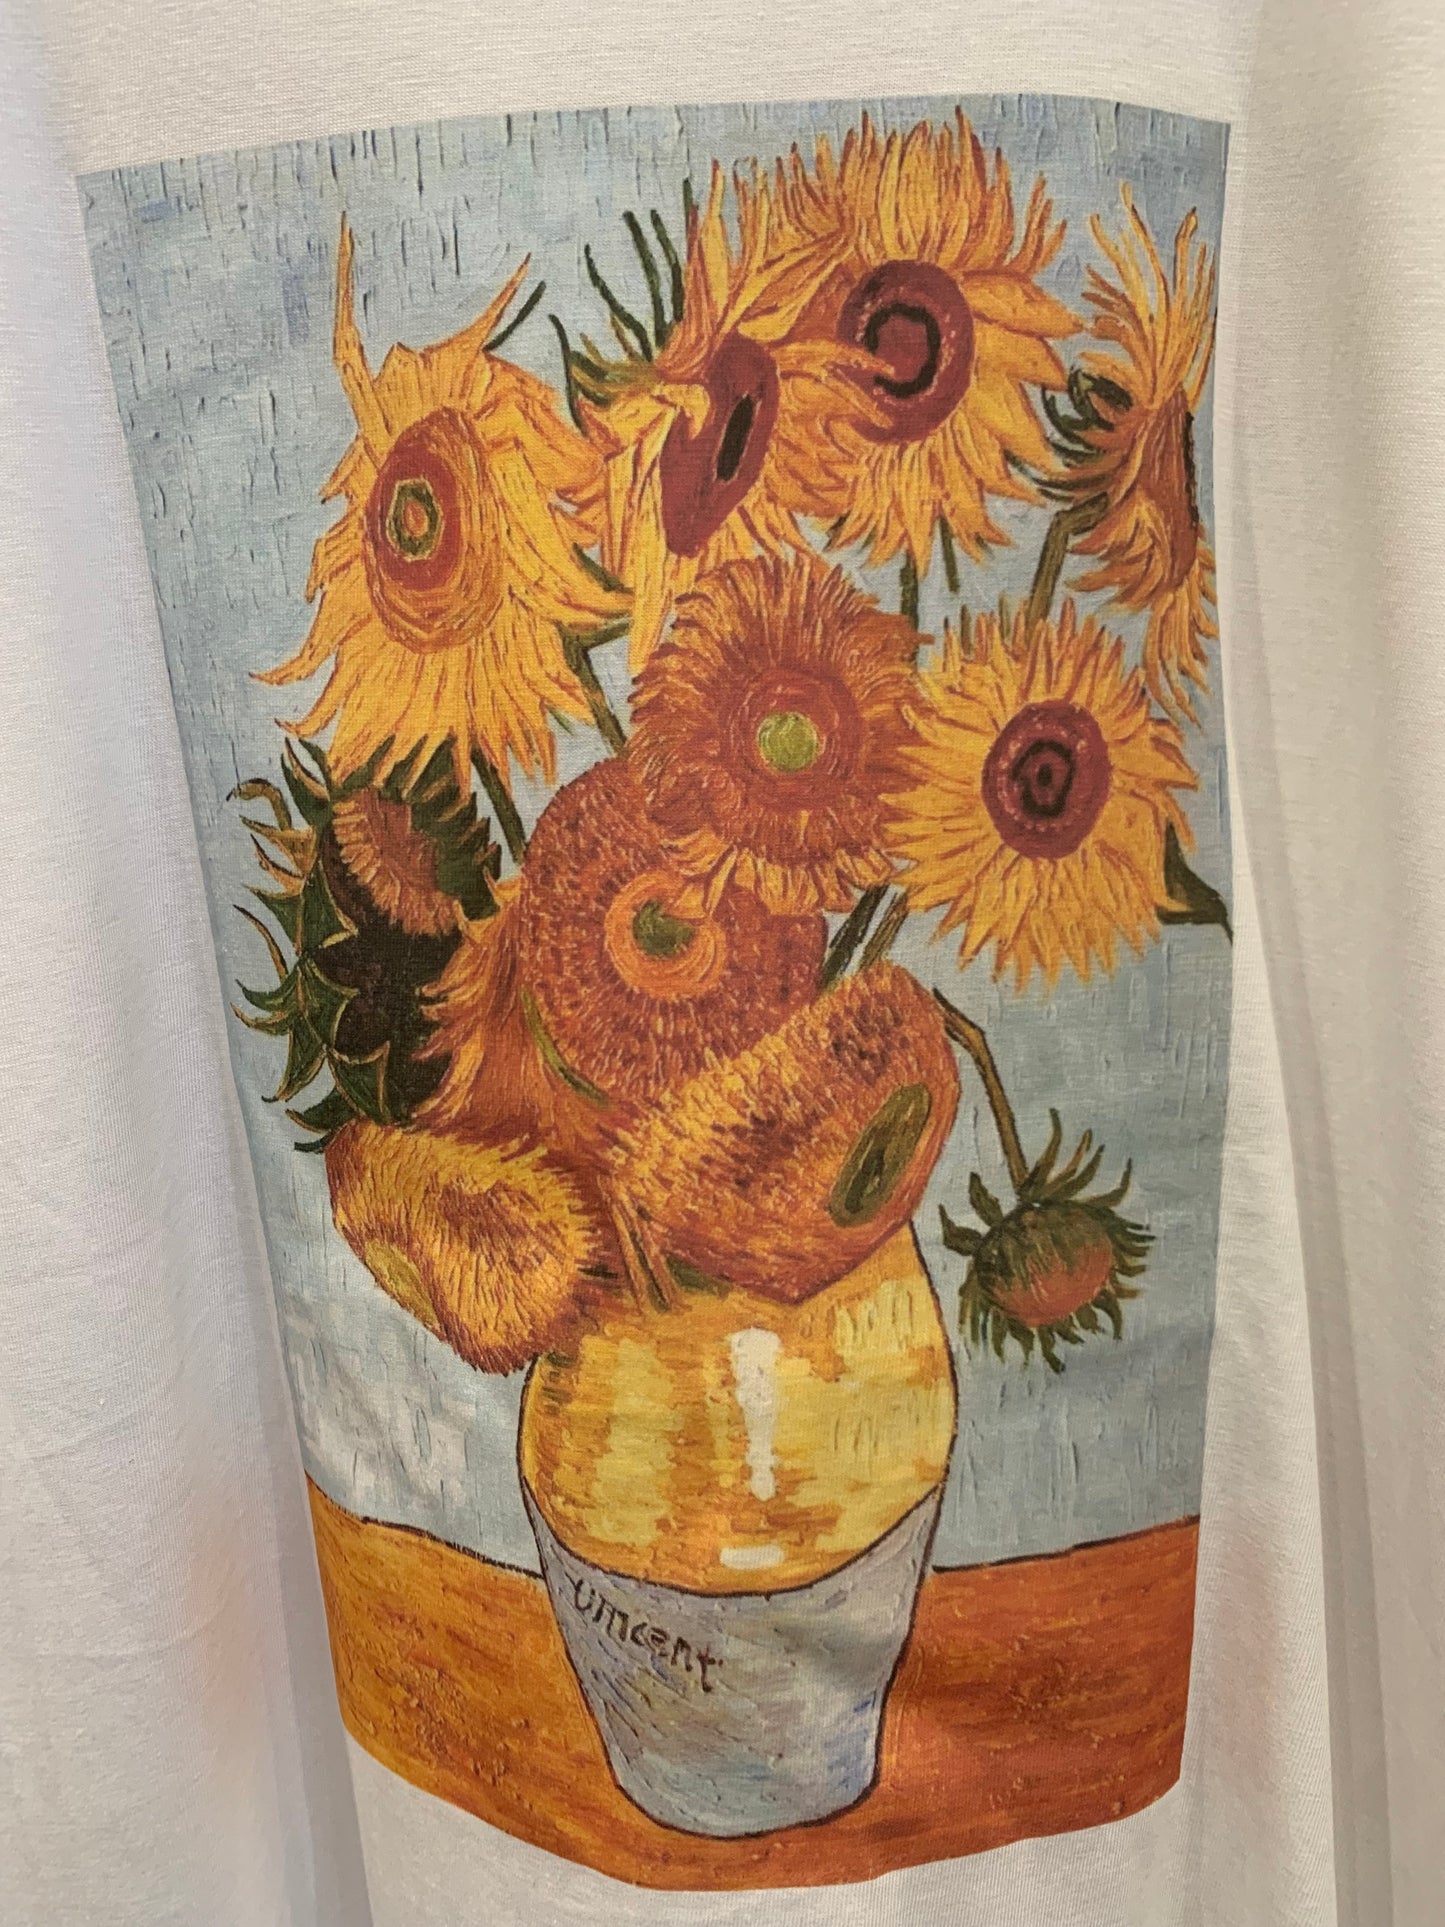 Van Gogh Sunflower T-Shirt